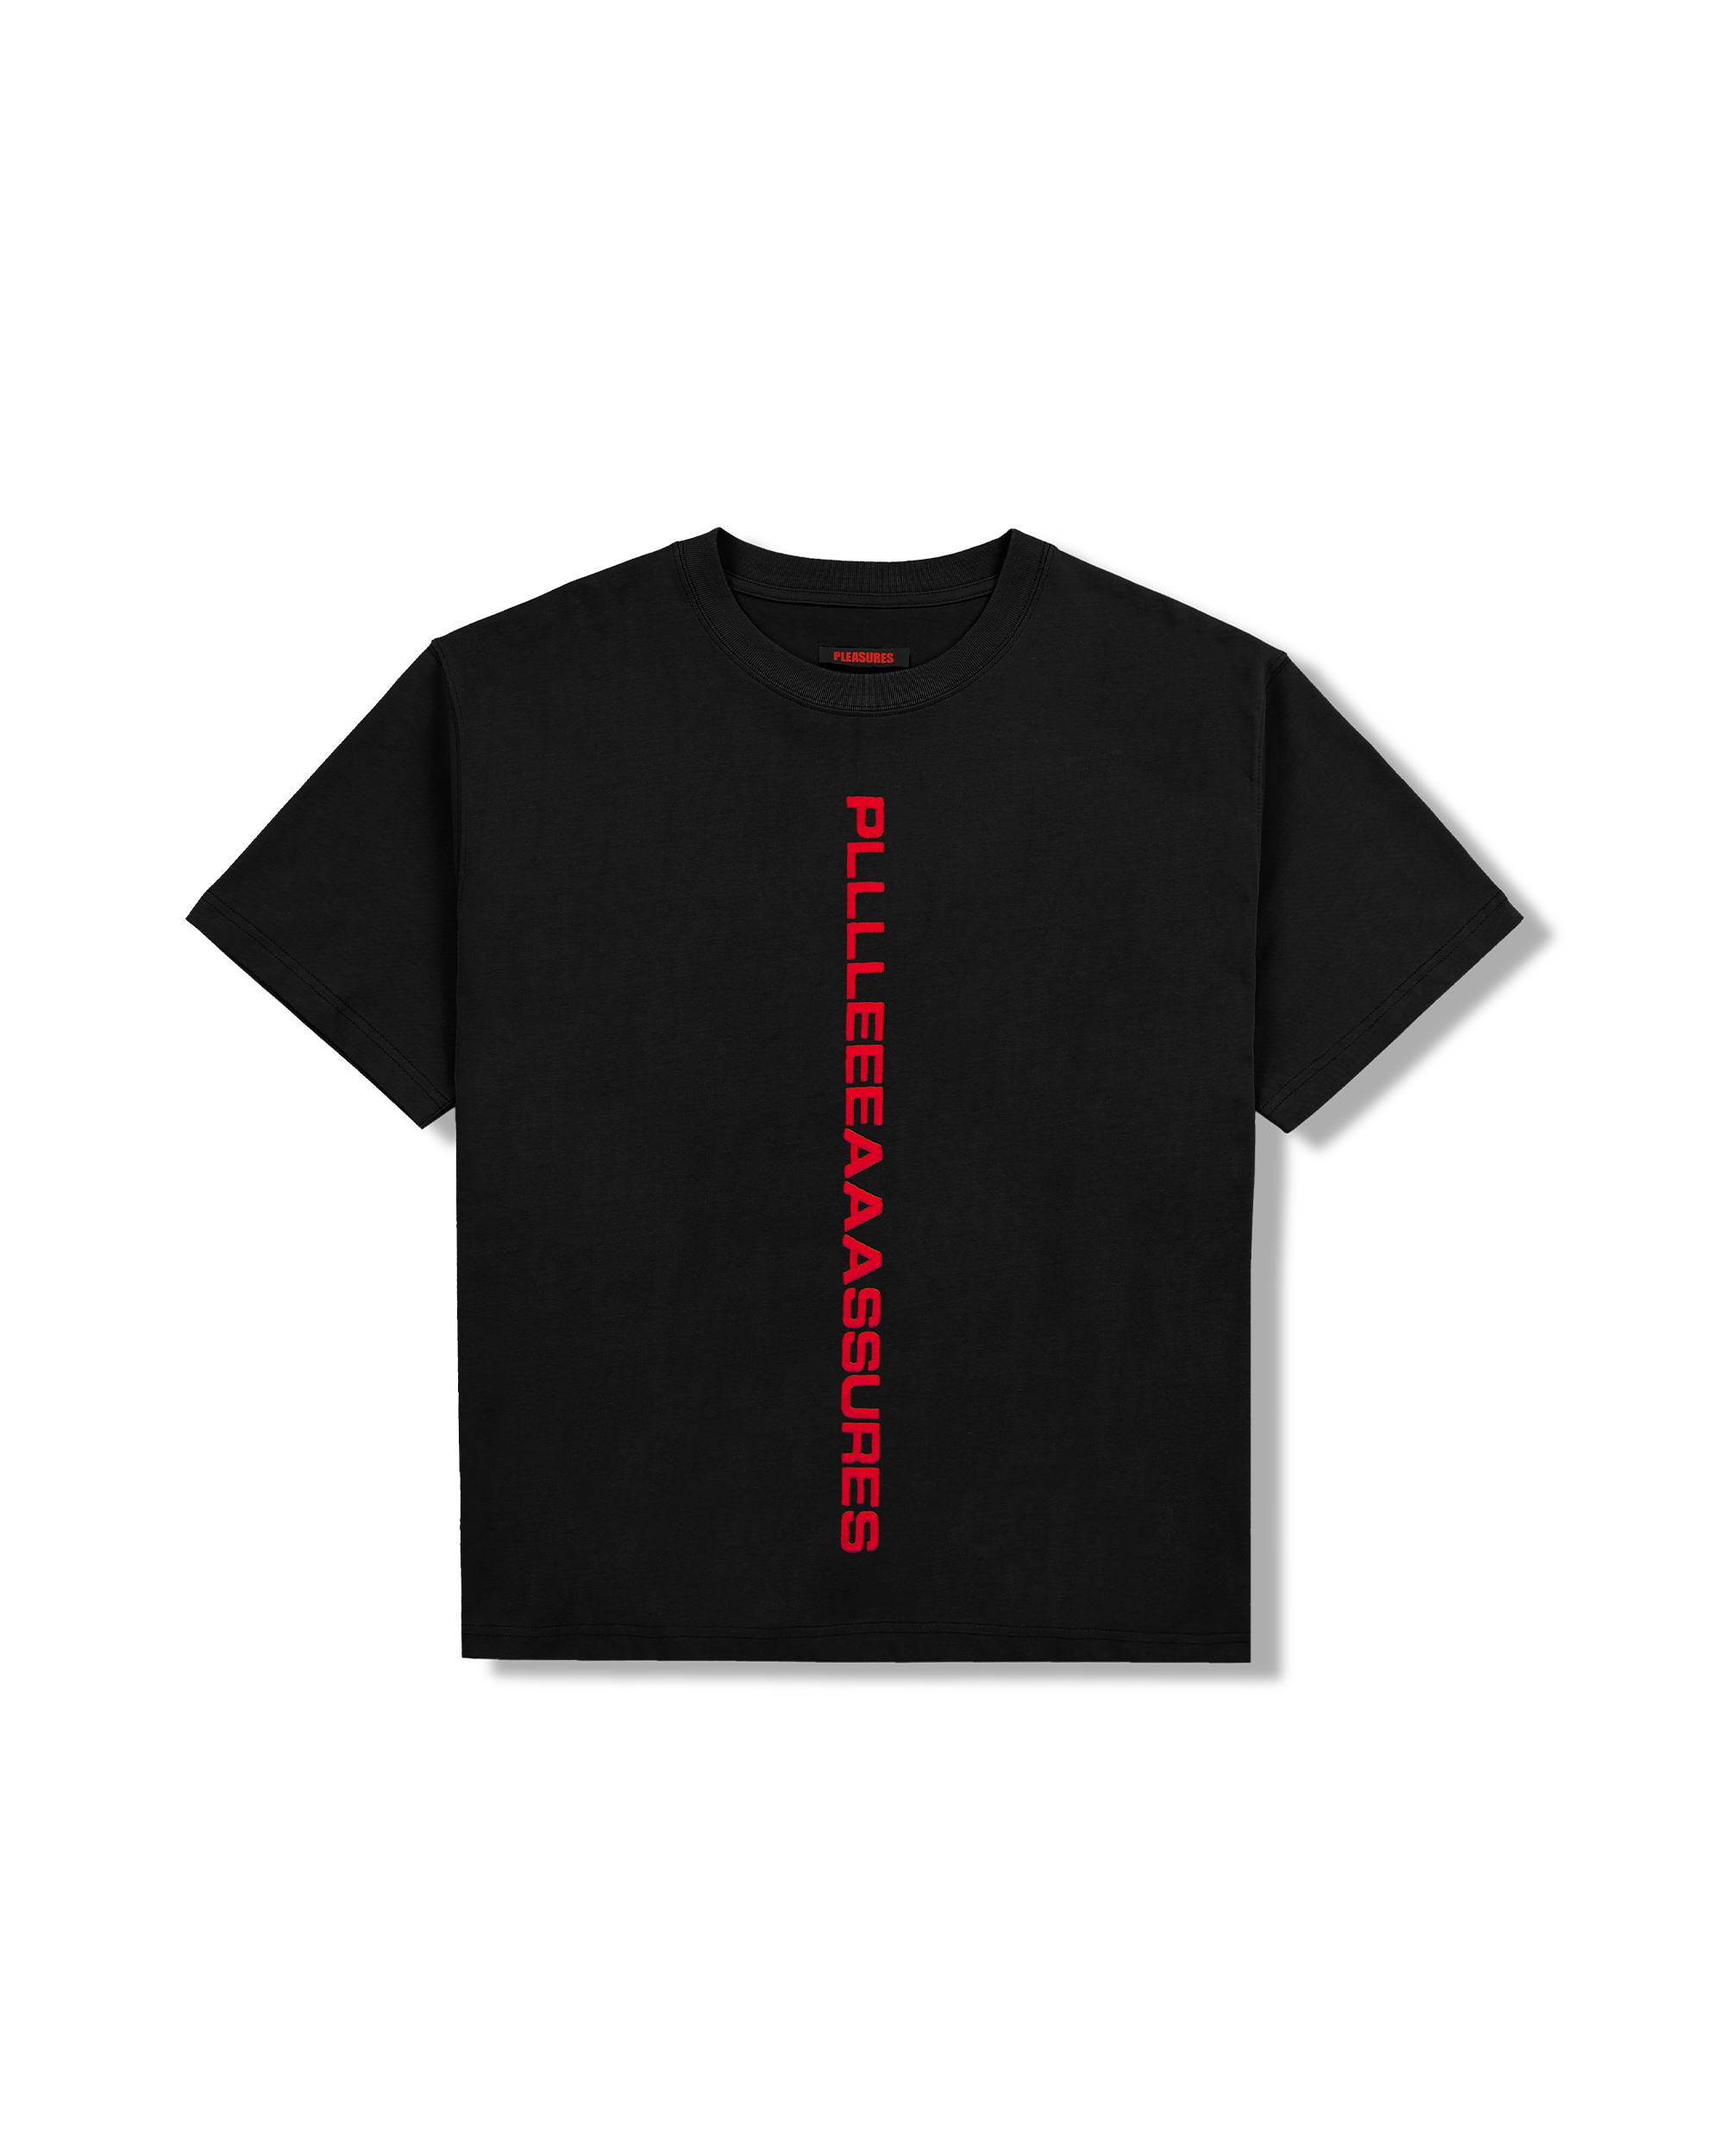 Drag Heavyweight T-Shirt - Black